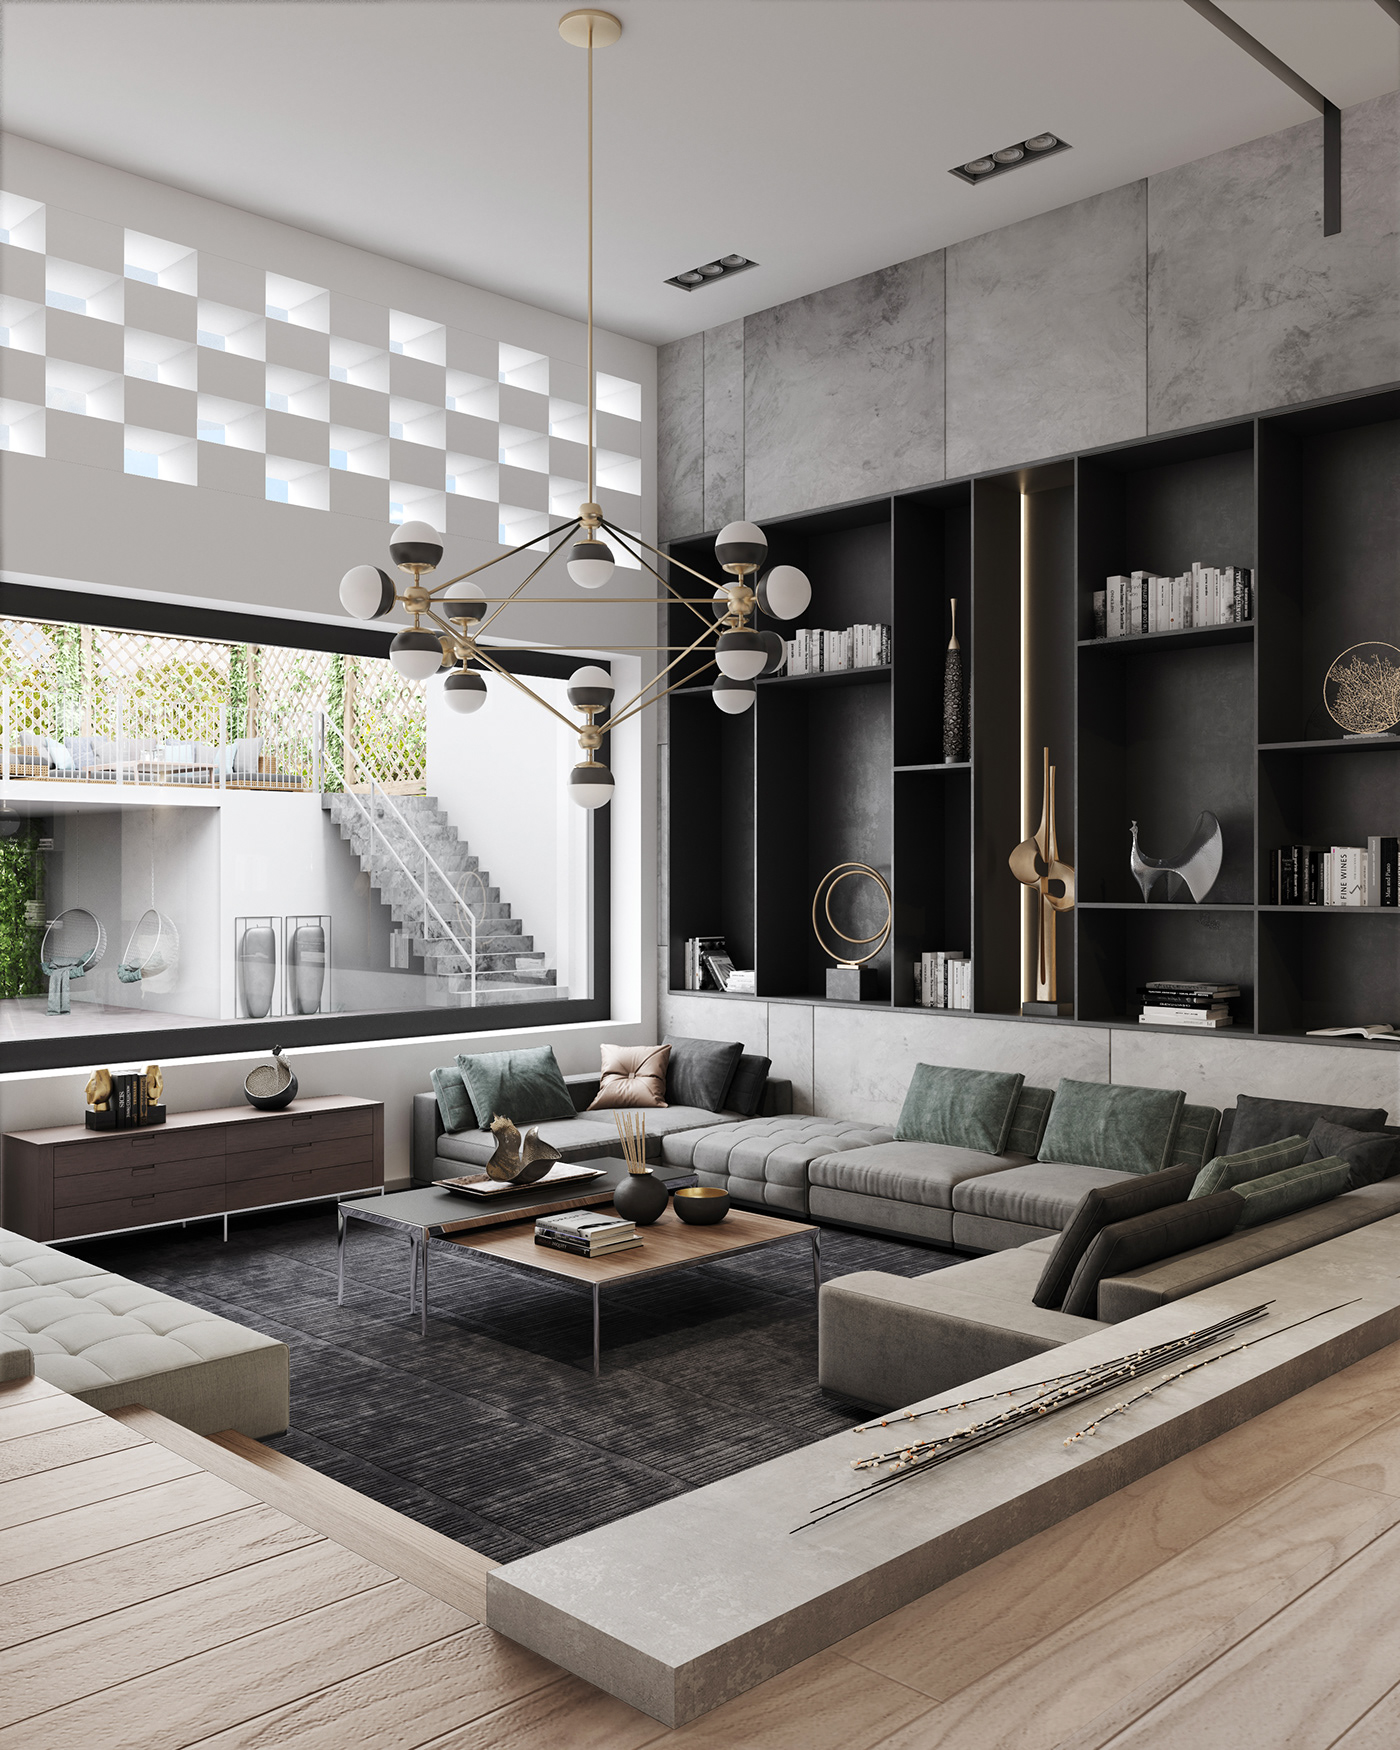 3ds max architecture contemporary design designer housedesign houseproject Interior interiorarchitecture milan